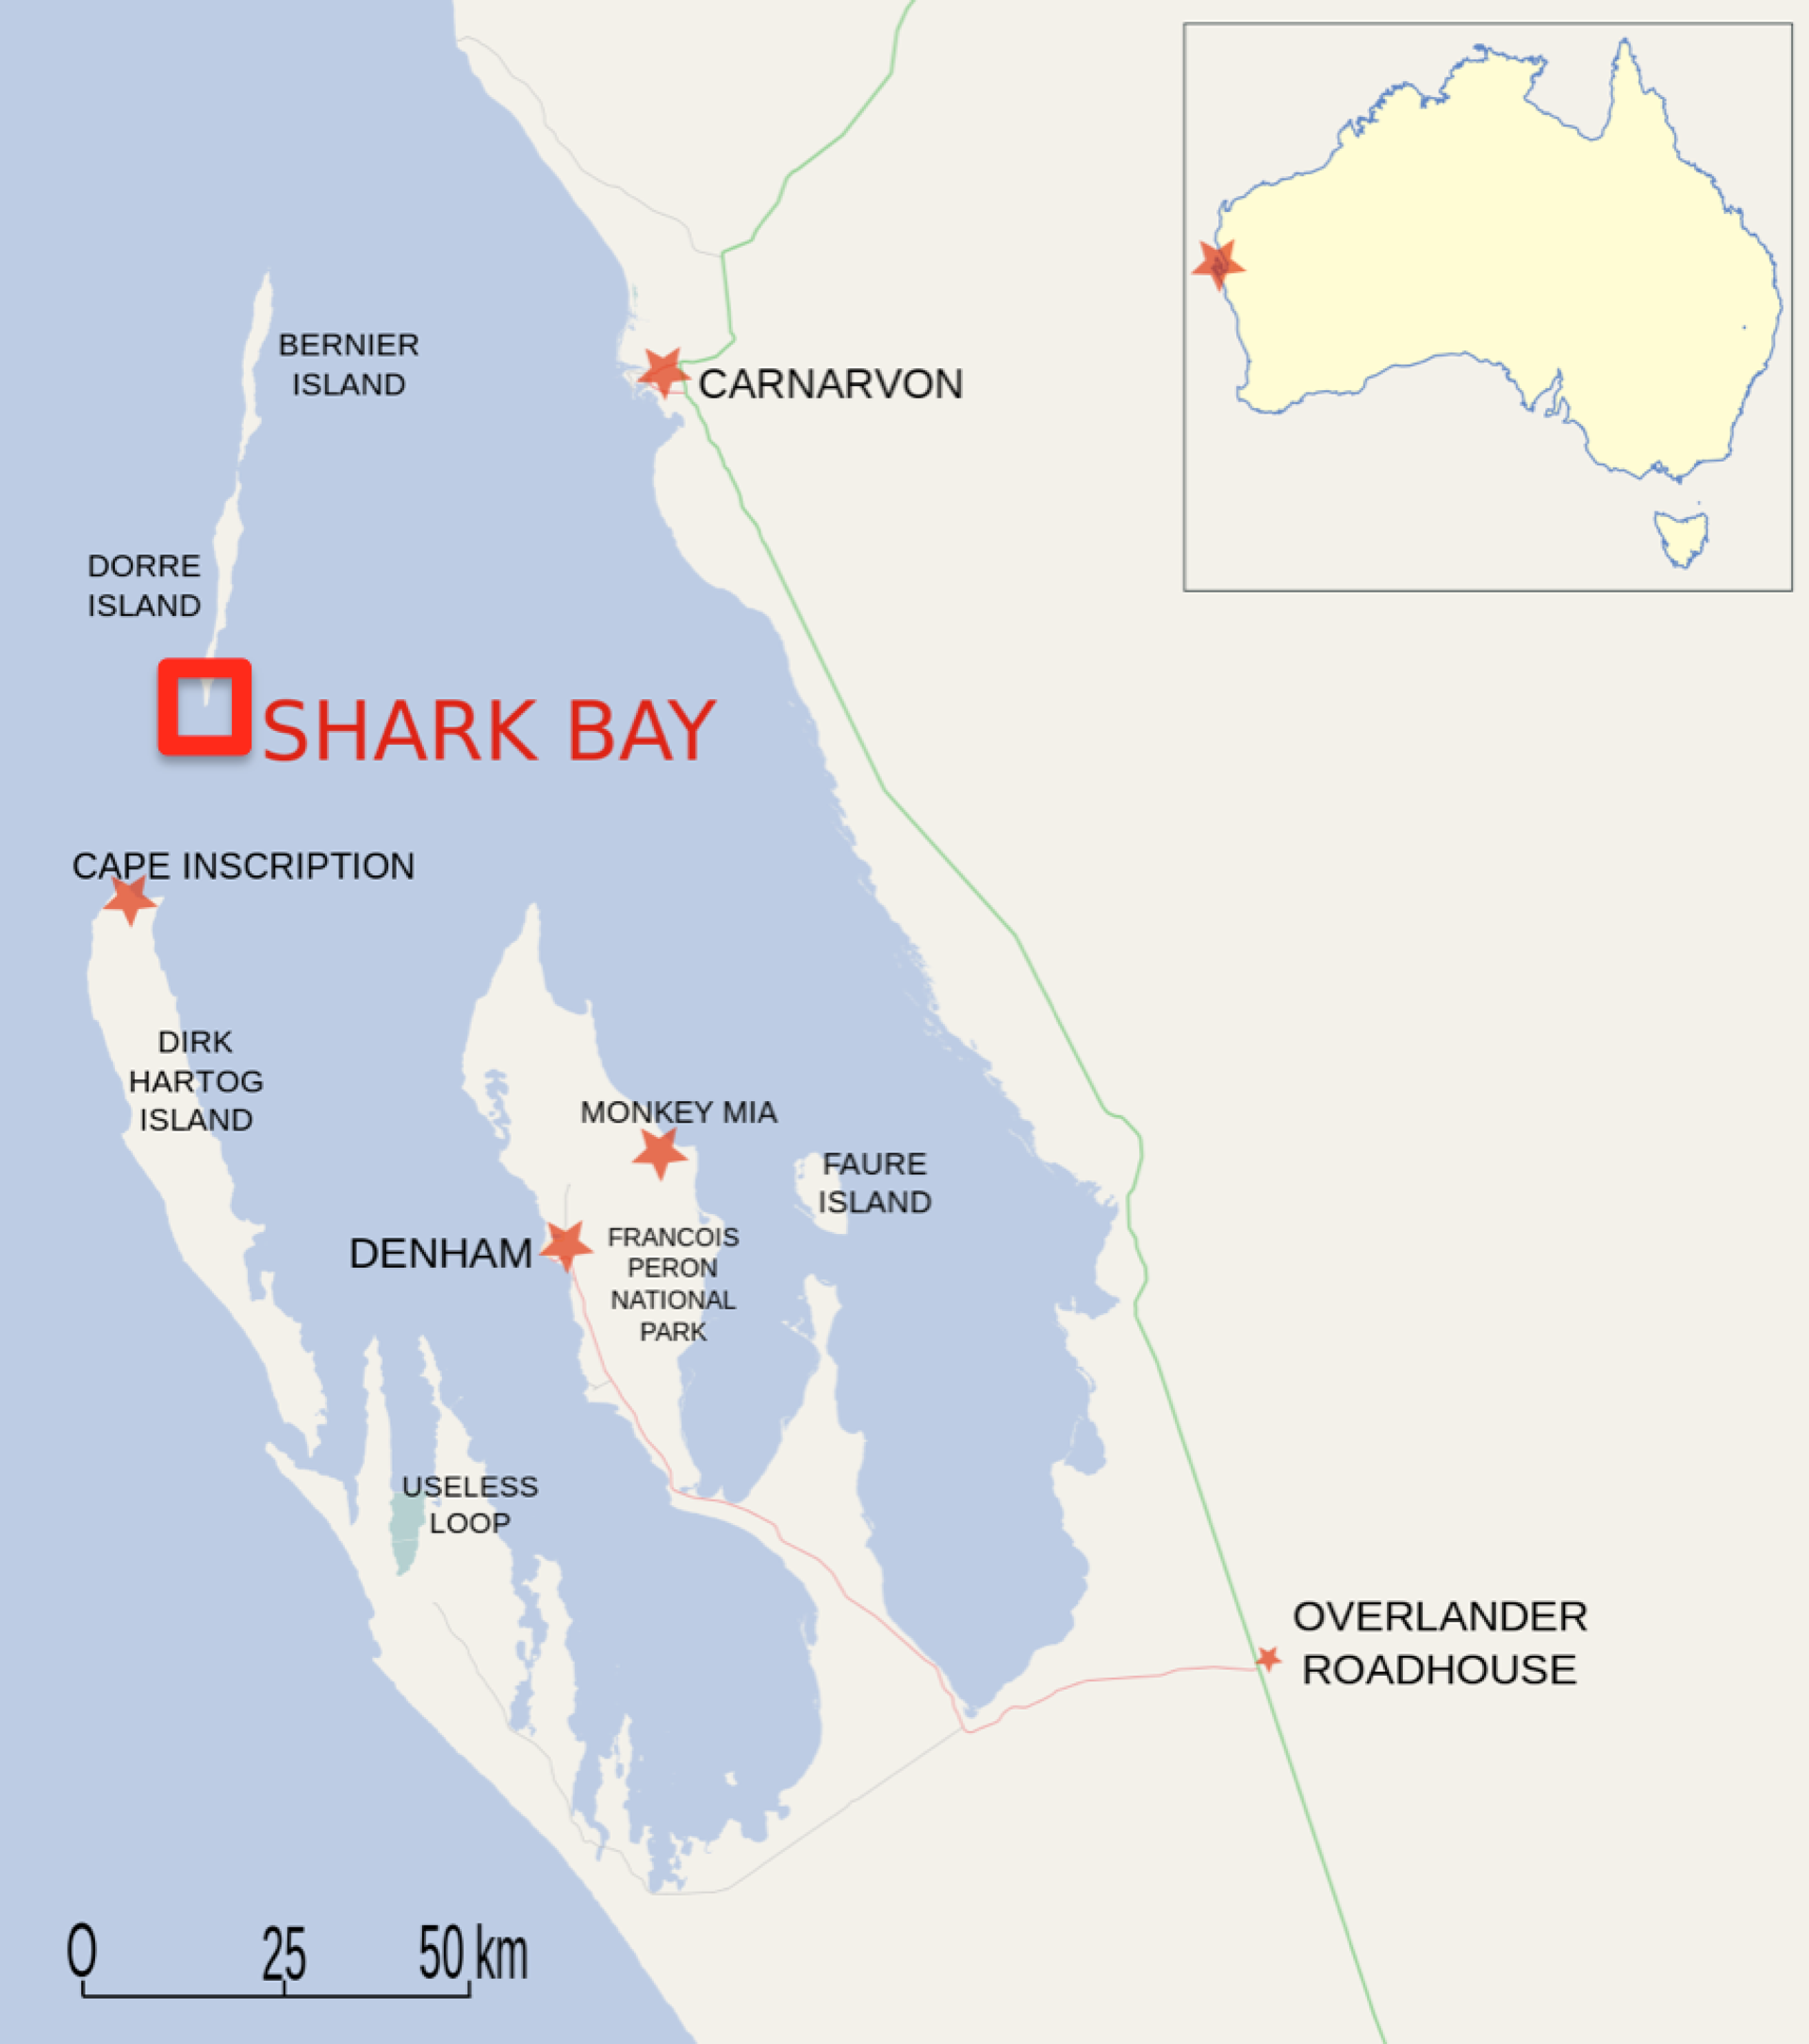 Dorre Island and Shark Bay